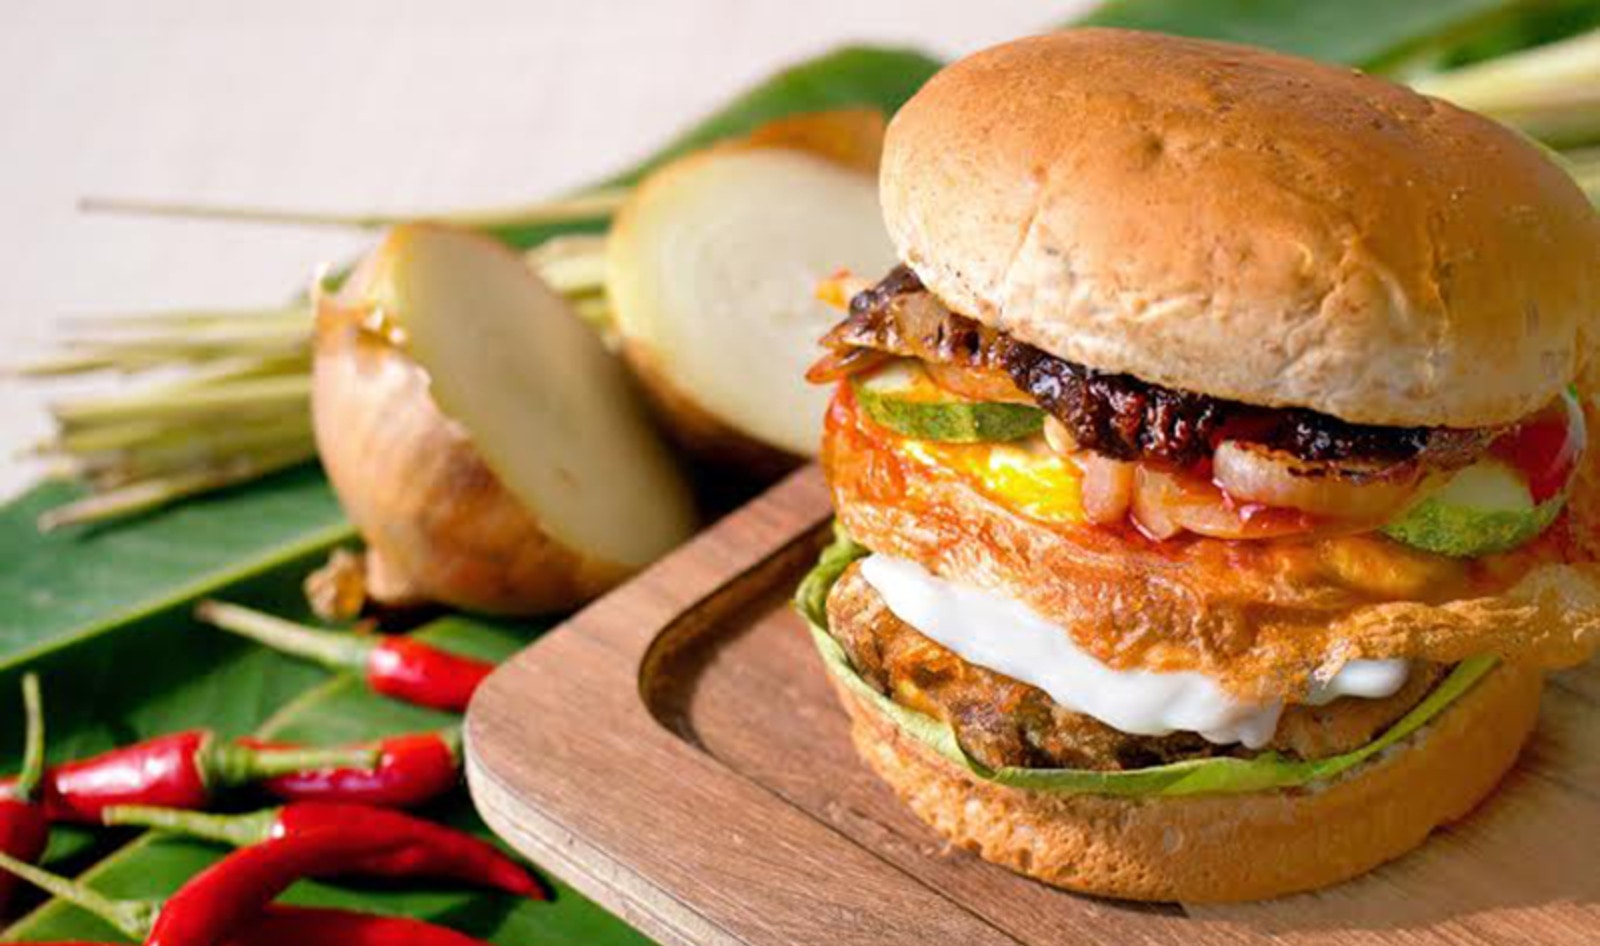 The “Summer of Love” Vegan Burger Debuts in San Francisco